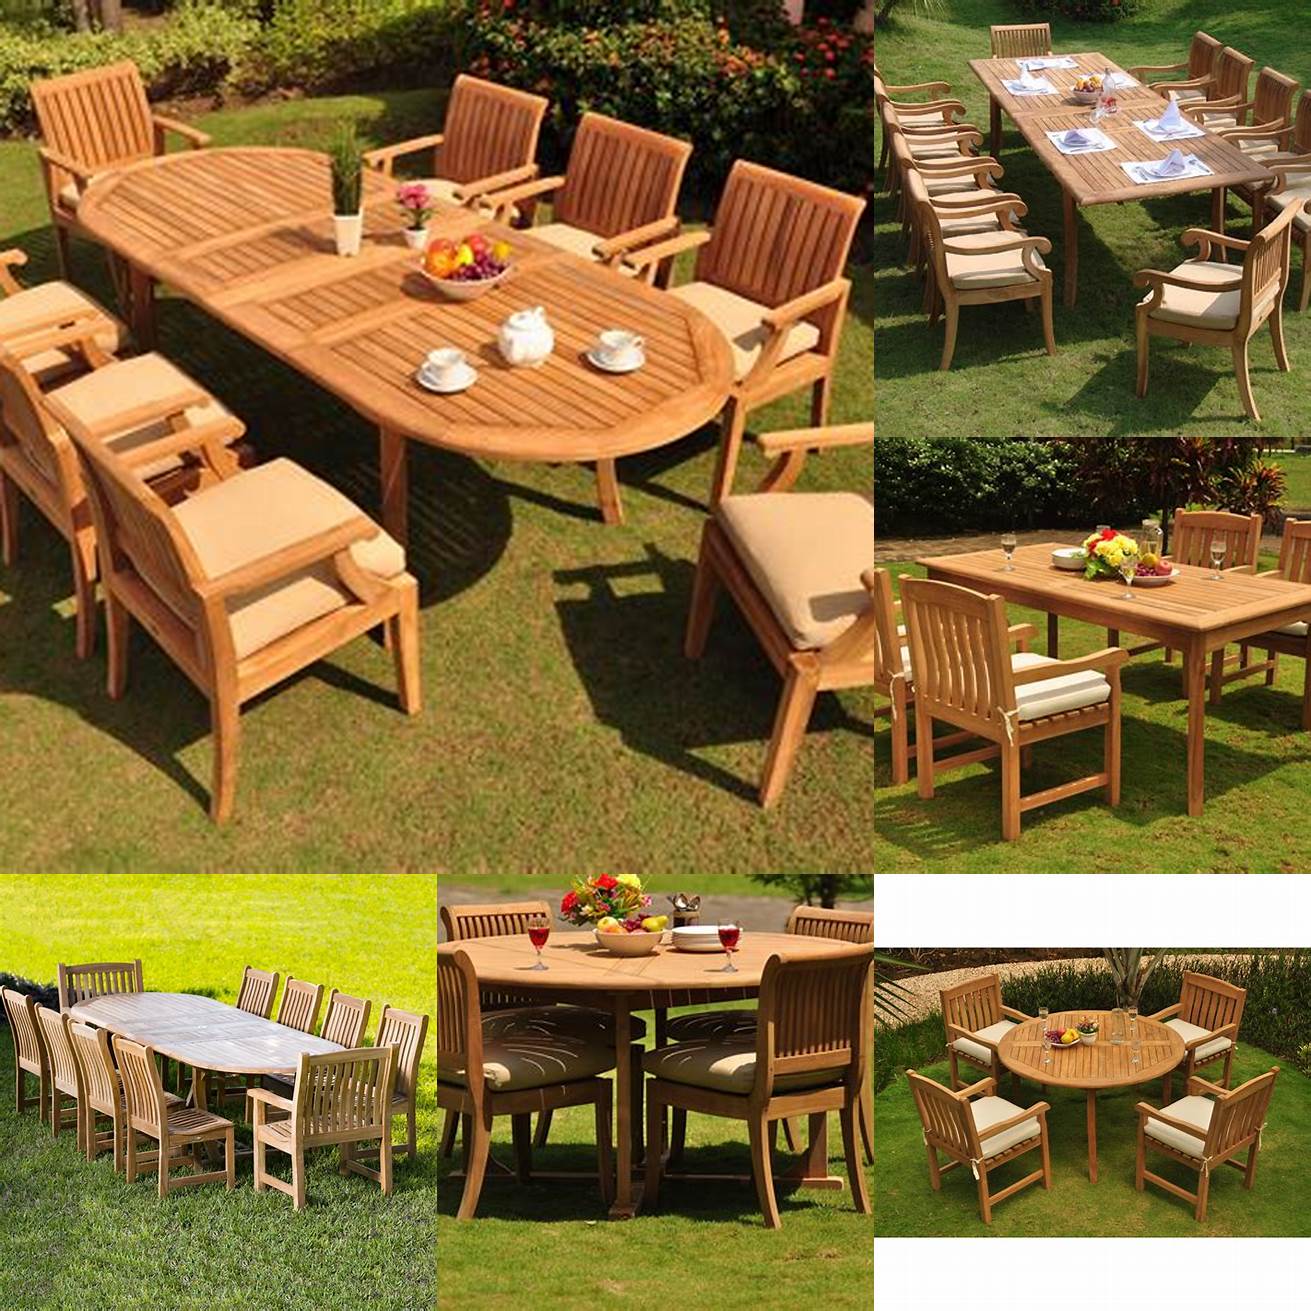 Teak wood outdoor dining furniture